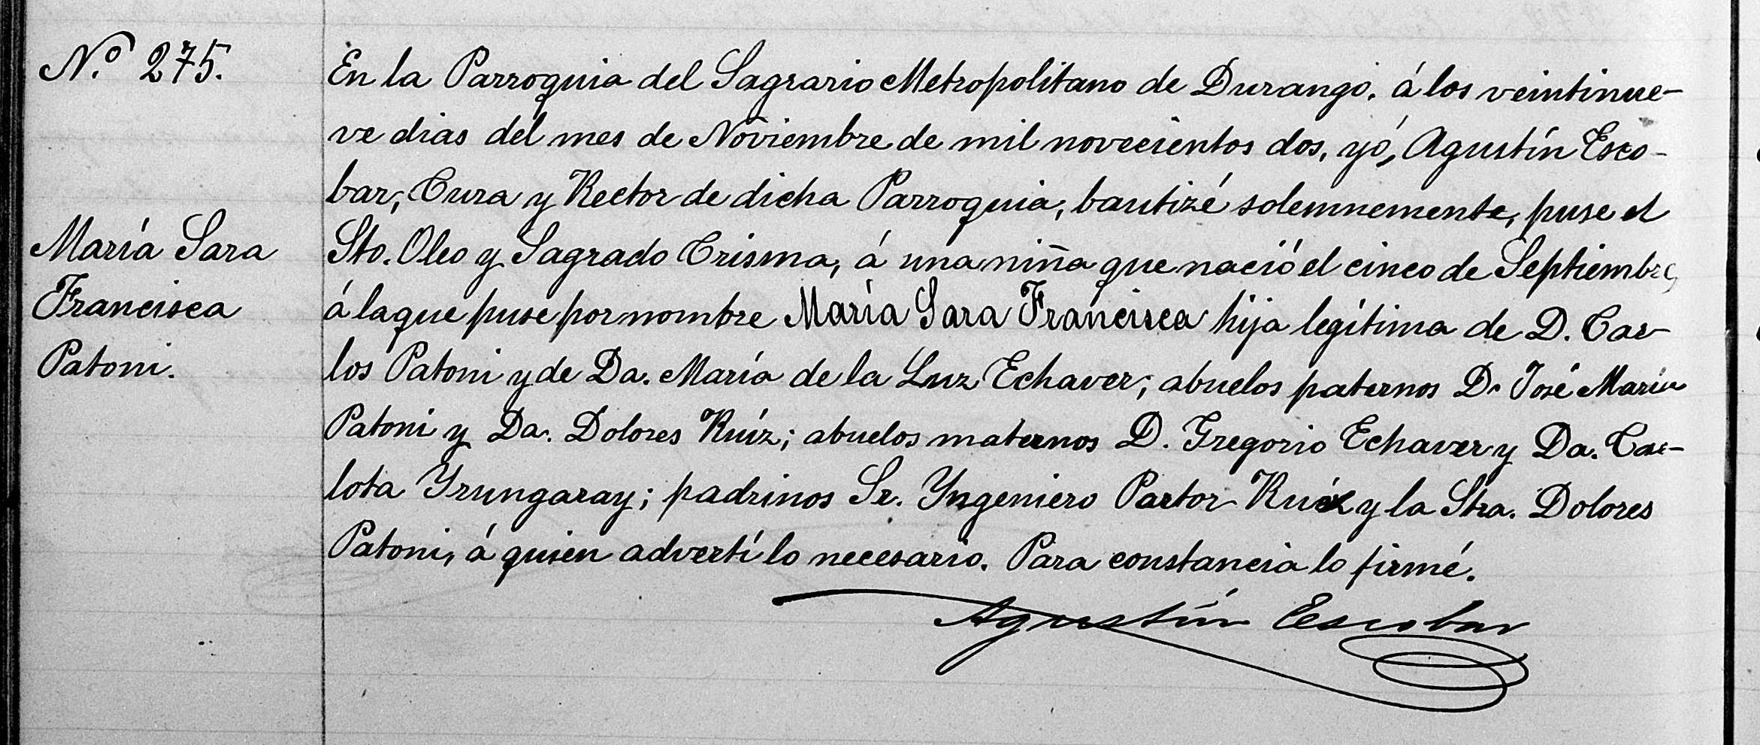 Church Birth Record of Maria Sara Francisca Patoni in 1902